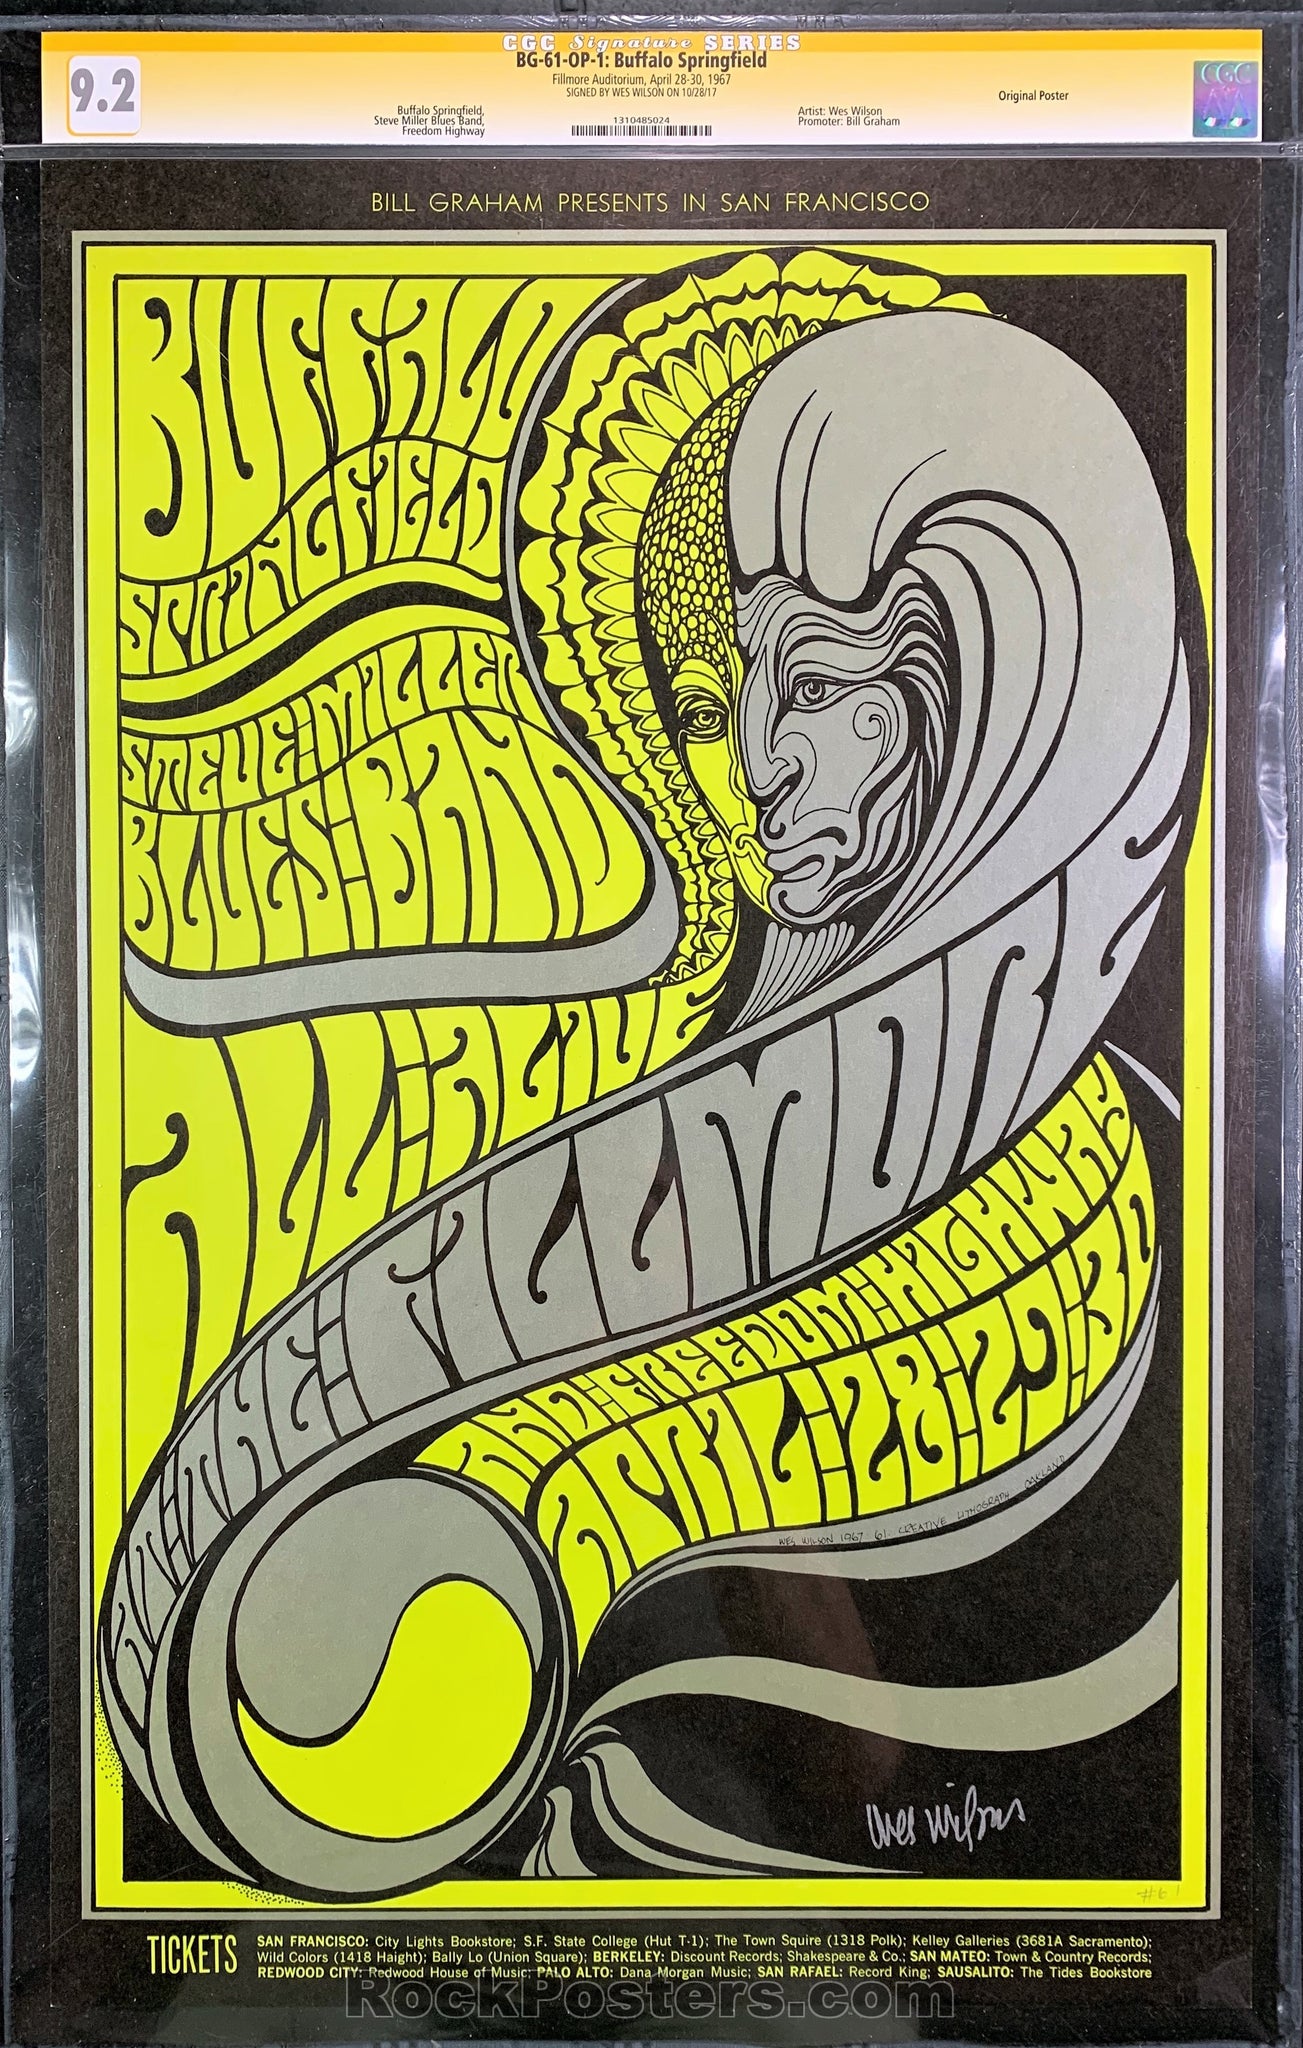 AUCTION - BG-61 - Buffalo Springfield - Wes Wilson Signed - 1967 Poster - Fillmore Auditorium - CGC Graded 9.2